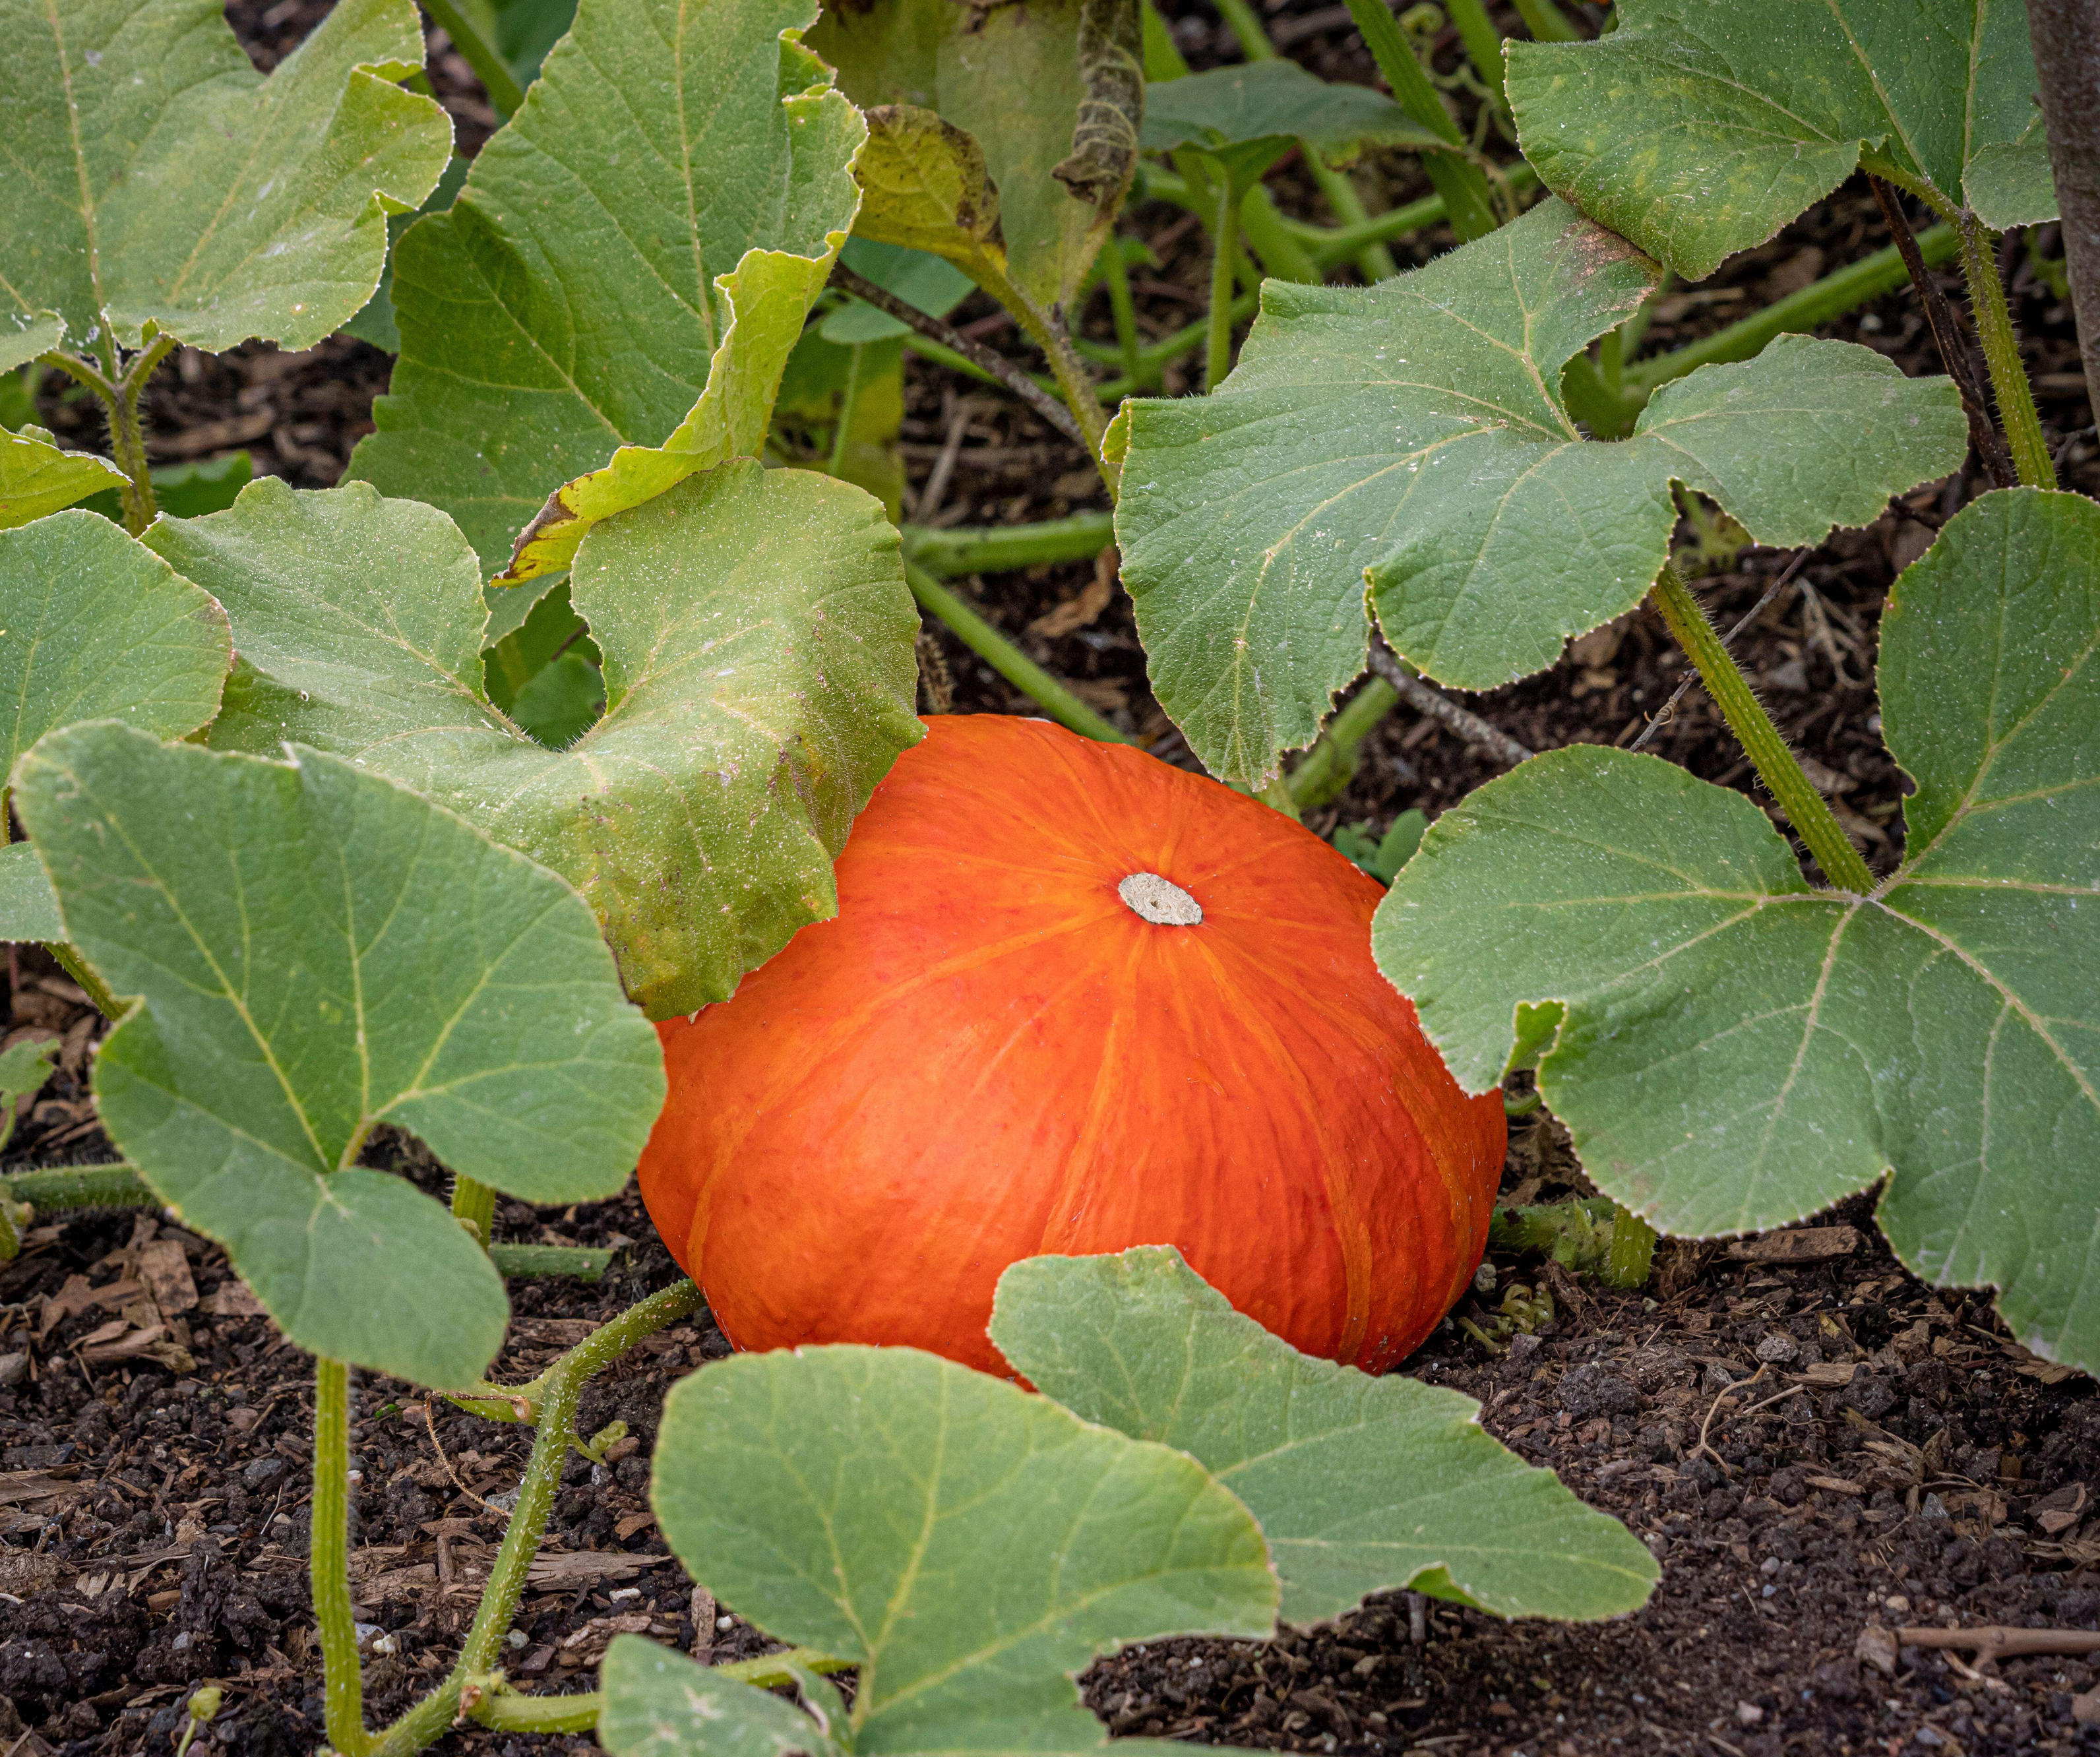 A pumpkin in a garden (Alamy/PA)